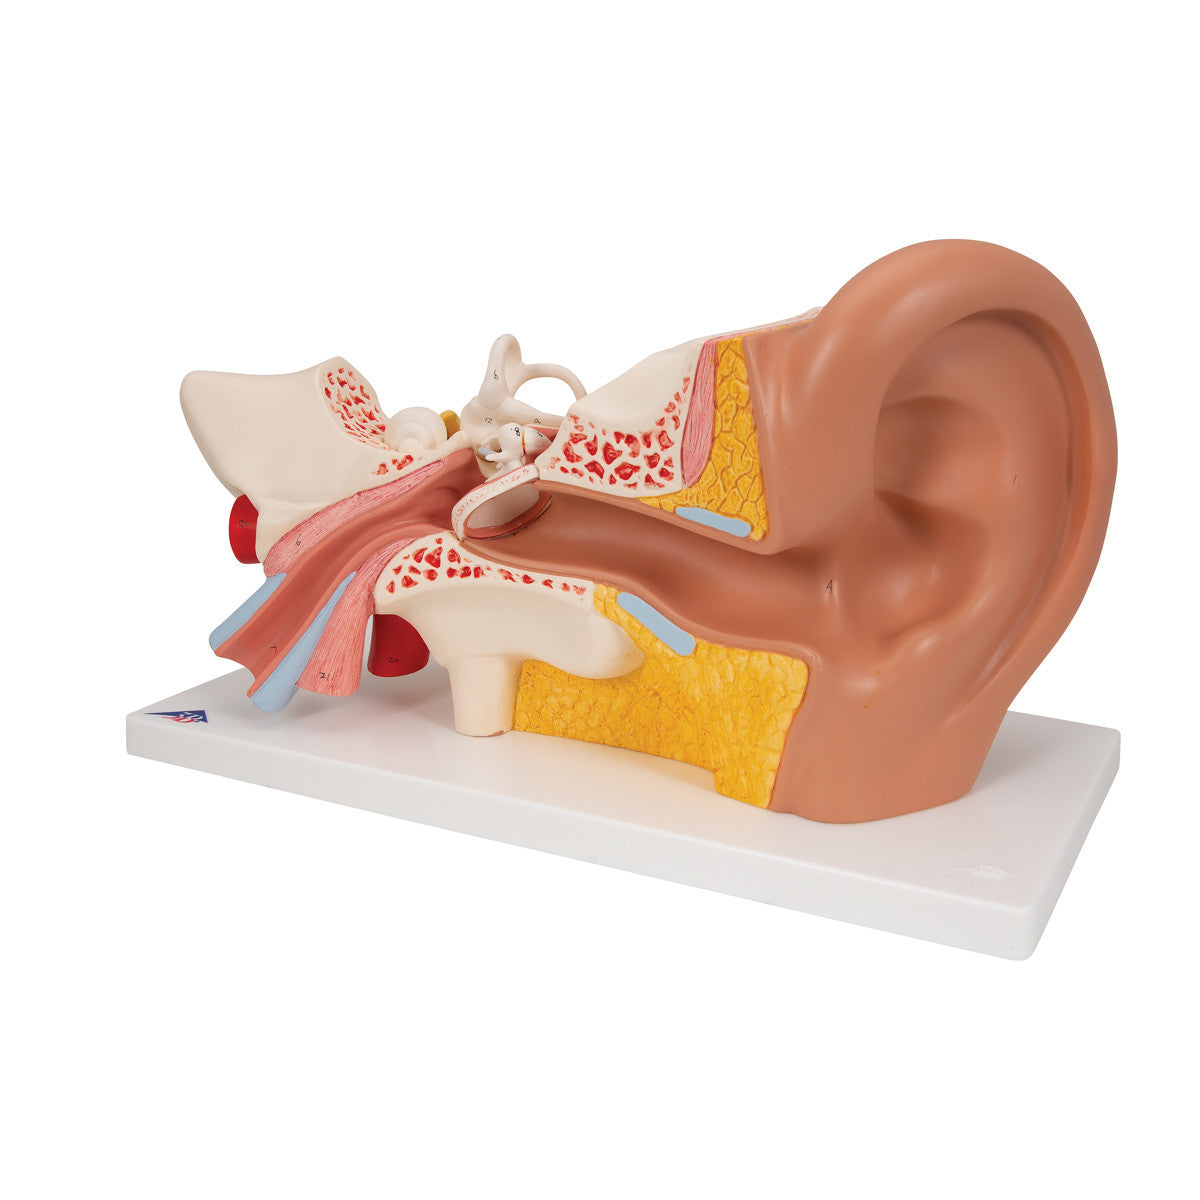 Ear, 3 times life-size, 4-part | 3B Scientific E10